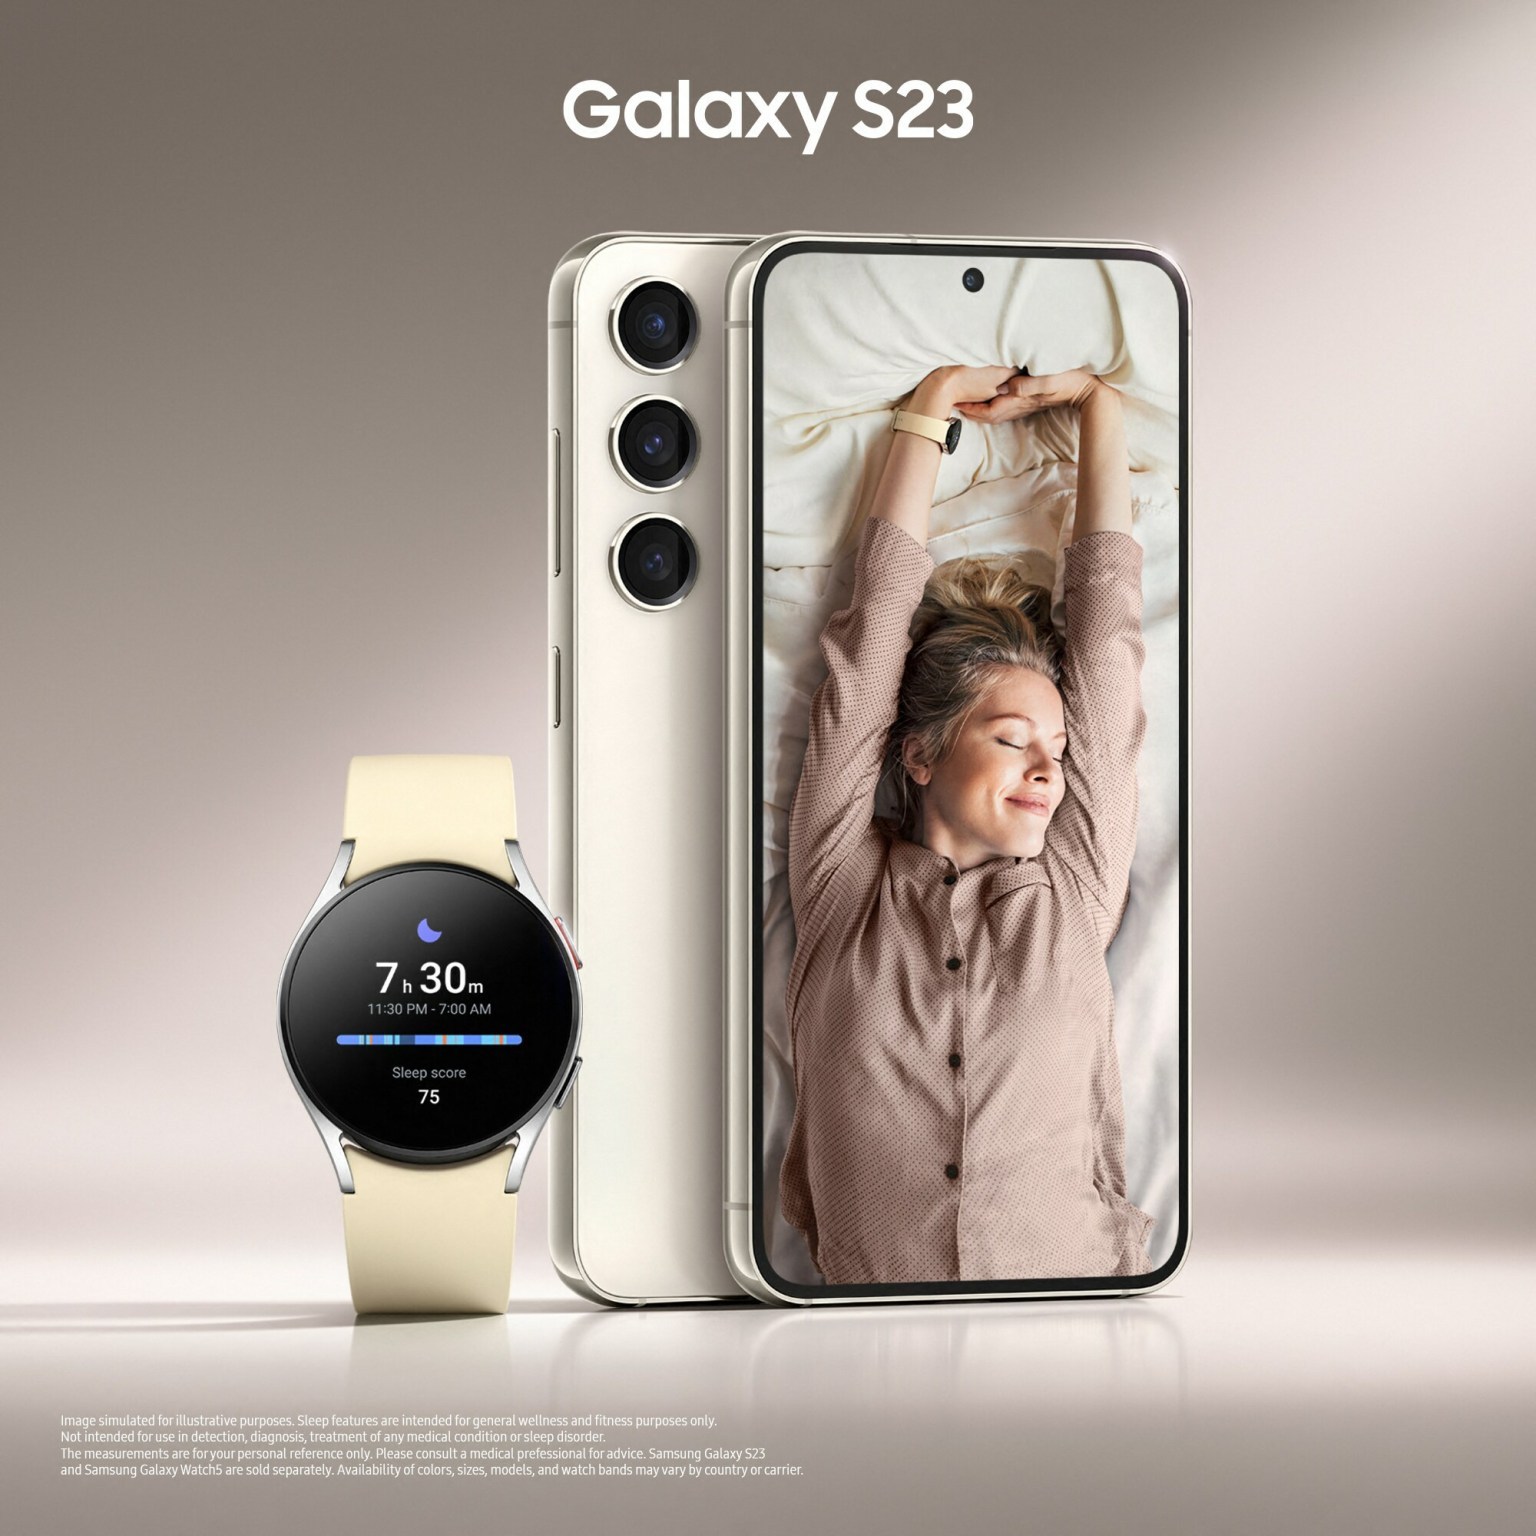 Samsung Galaxy S20 Plus Стекло Камеры